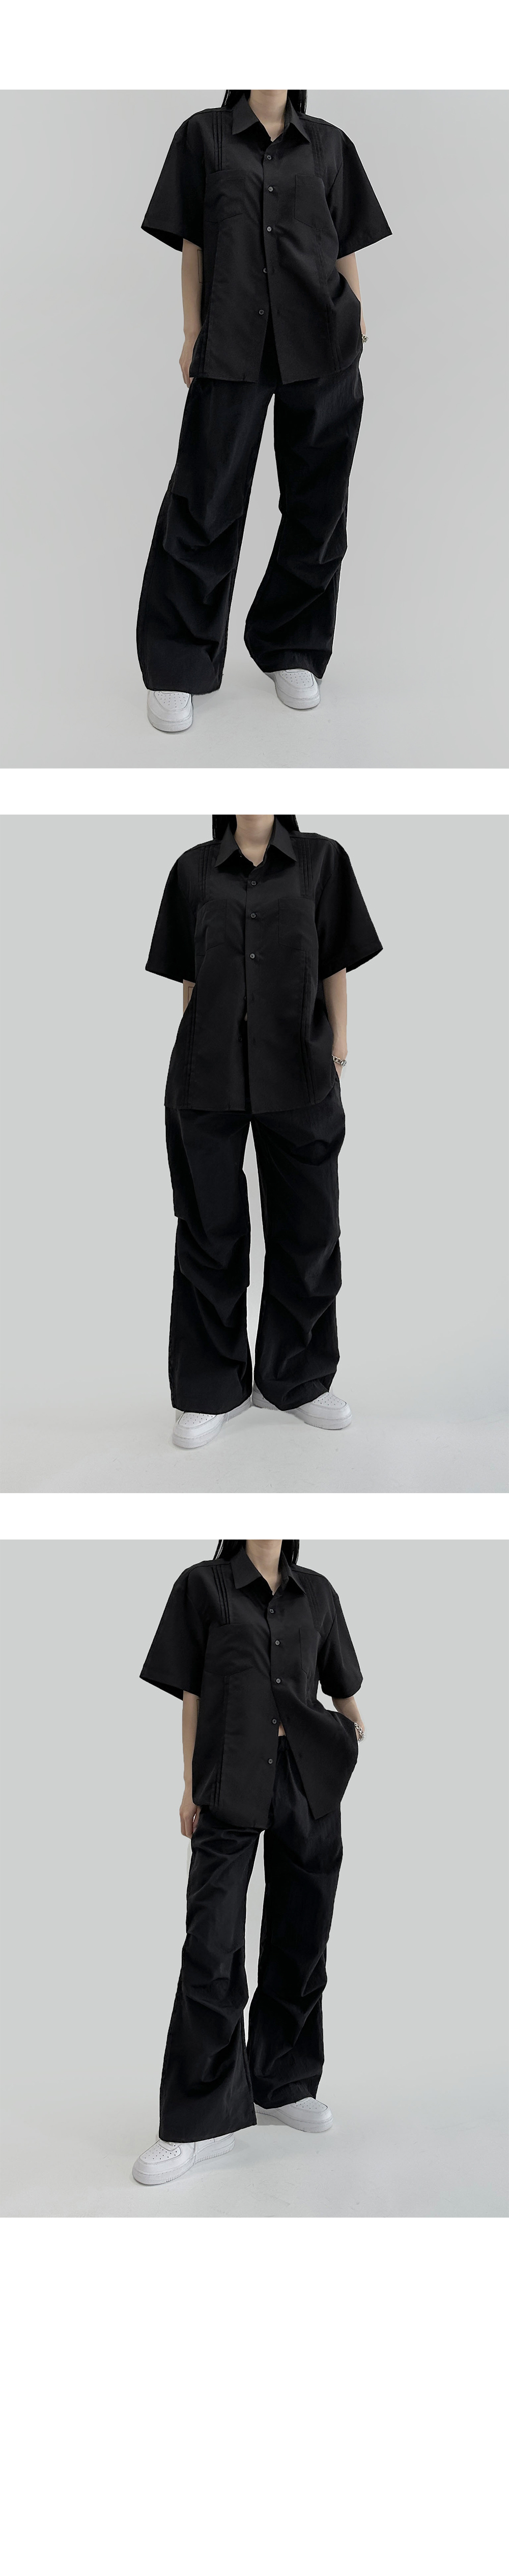 suspenders skirt/pants charcoal color image-S1L5